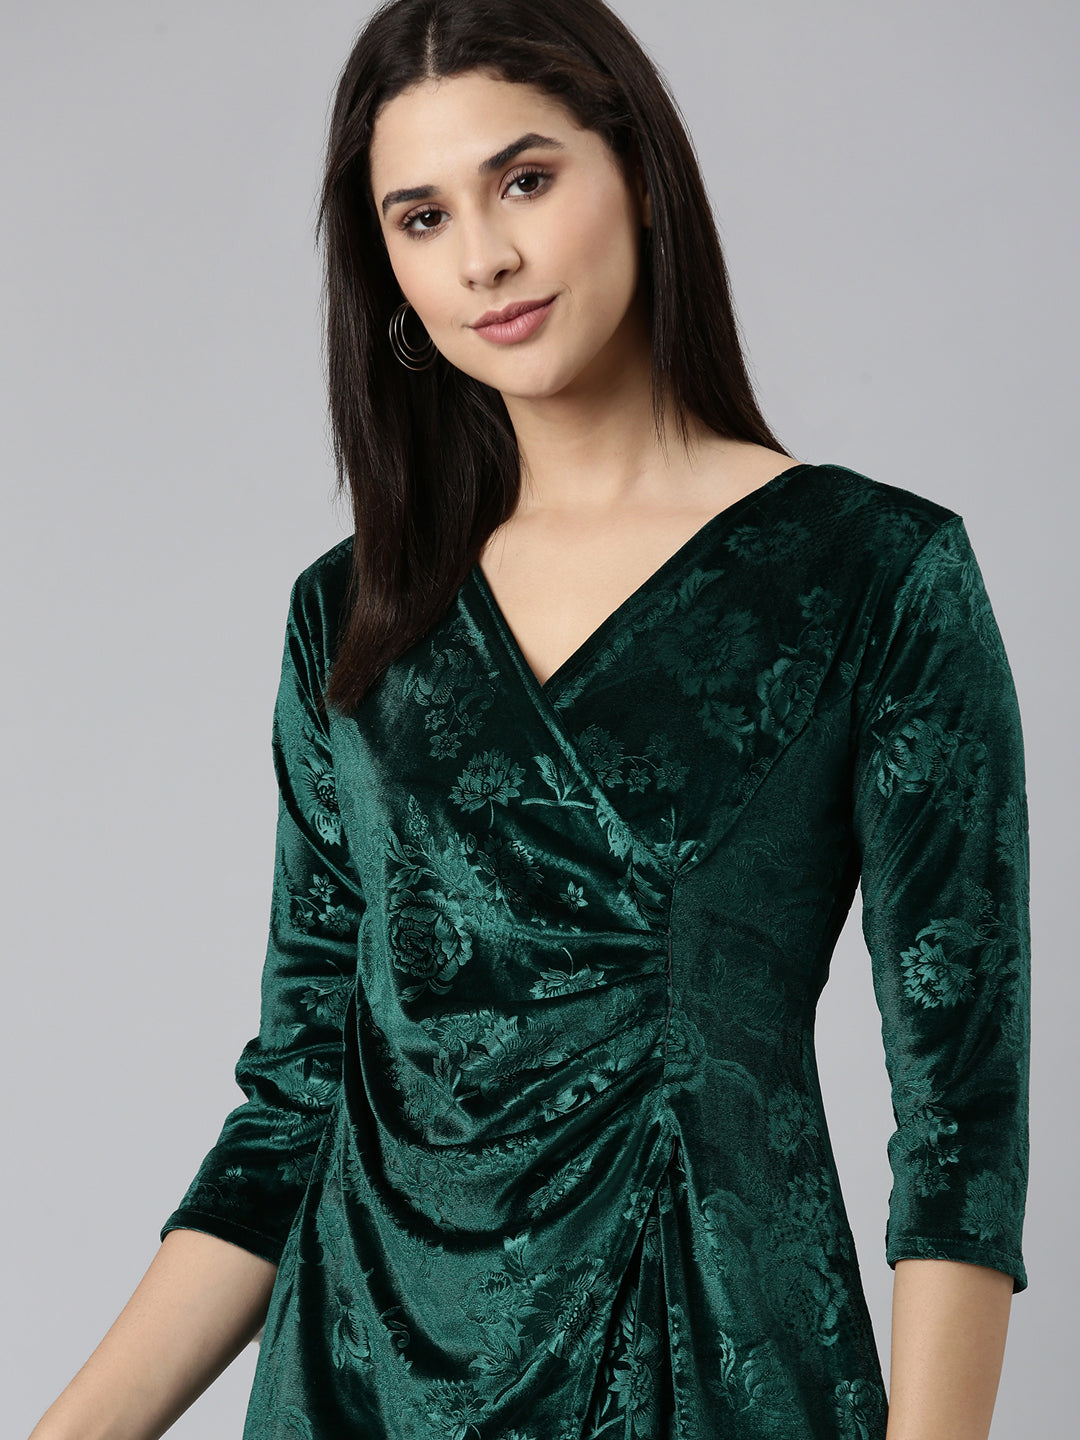 Women Green Solid Bodycon Dress